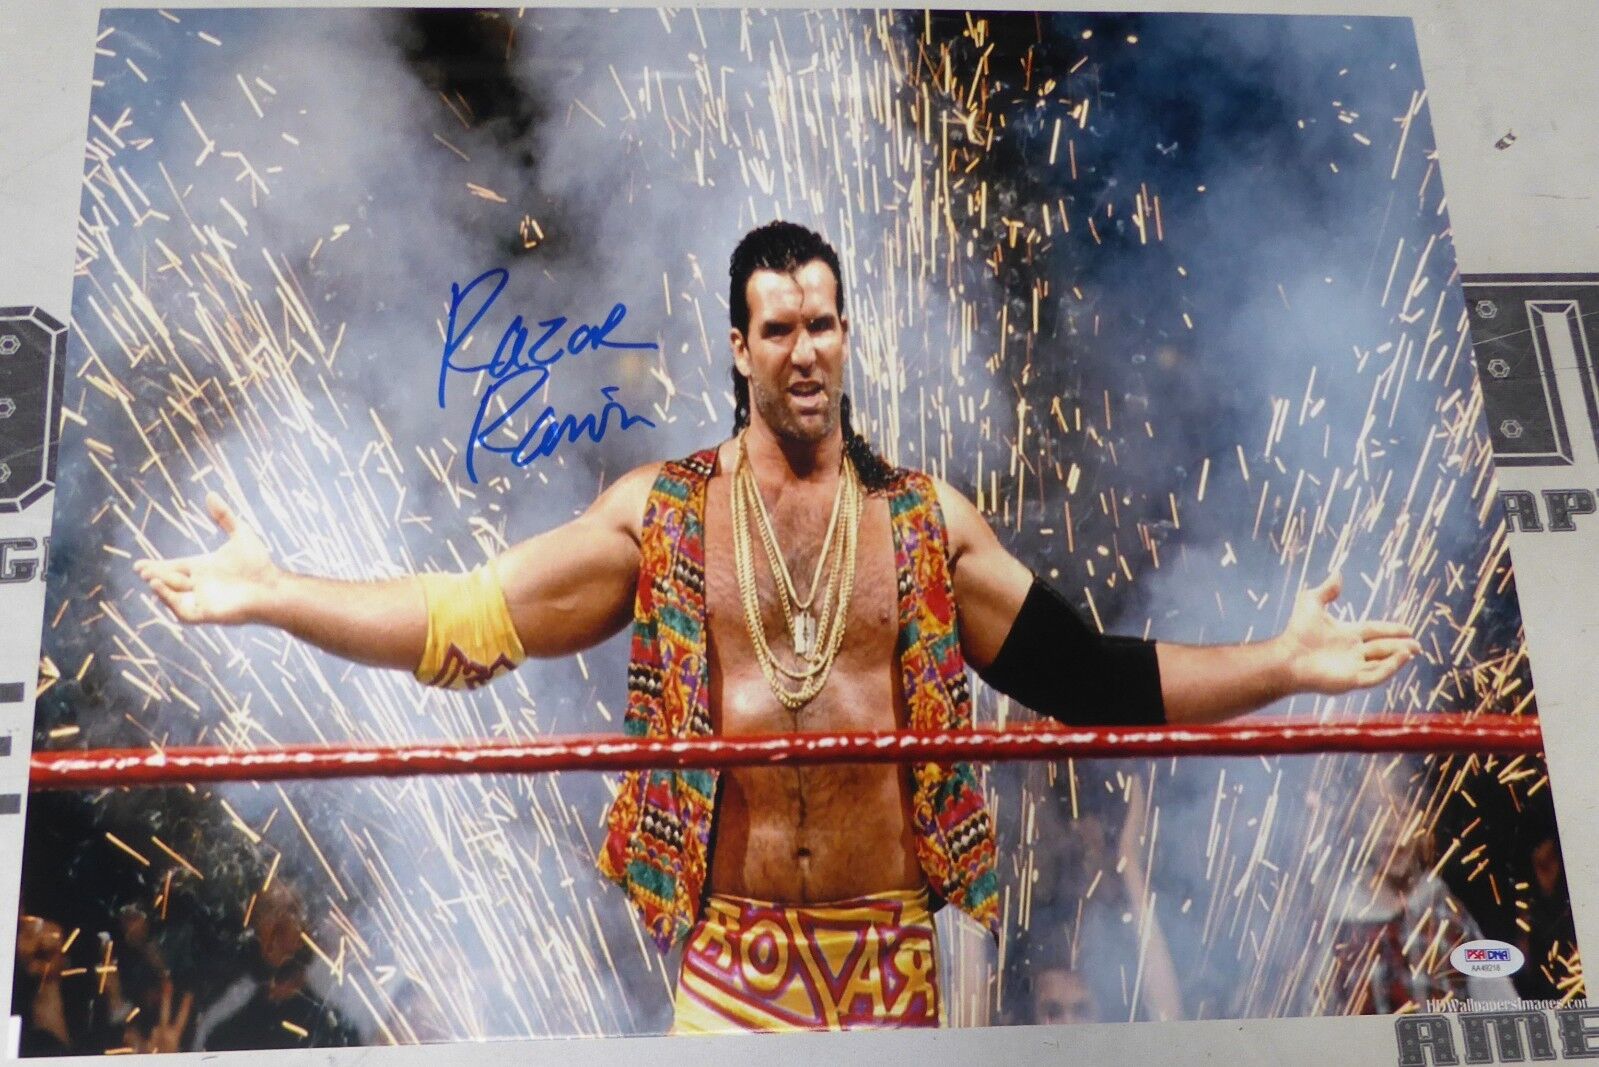 Razor Ramon Signed WWE 16x20 Photo Poster painting PSA/DNA COA Scott Hall Picture Autograph WCW